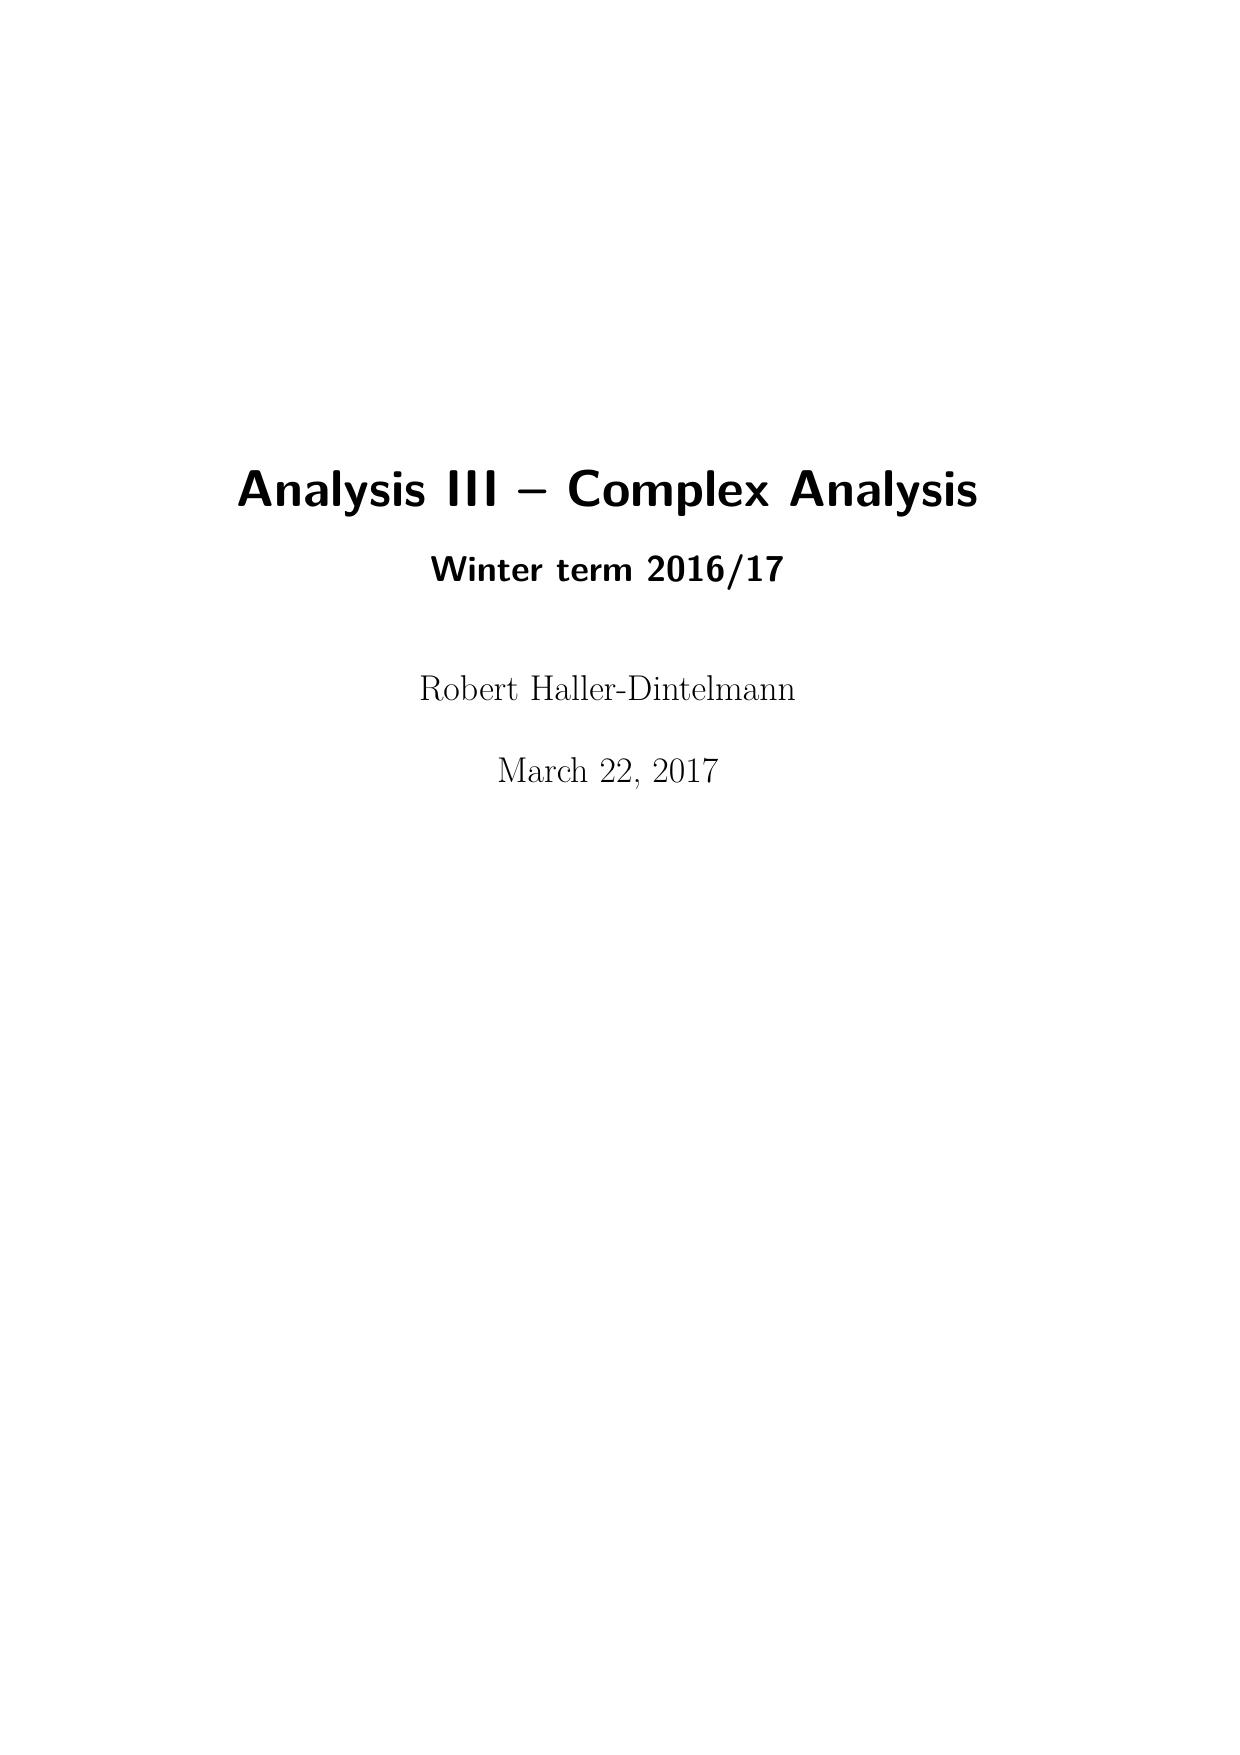 Analysis III- Complex Analysis 2017